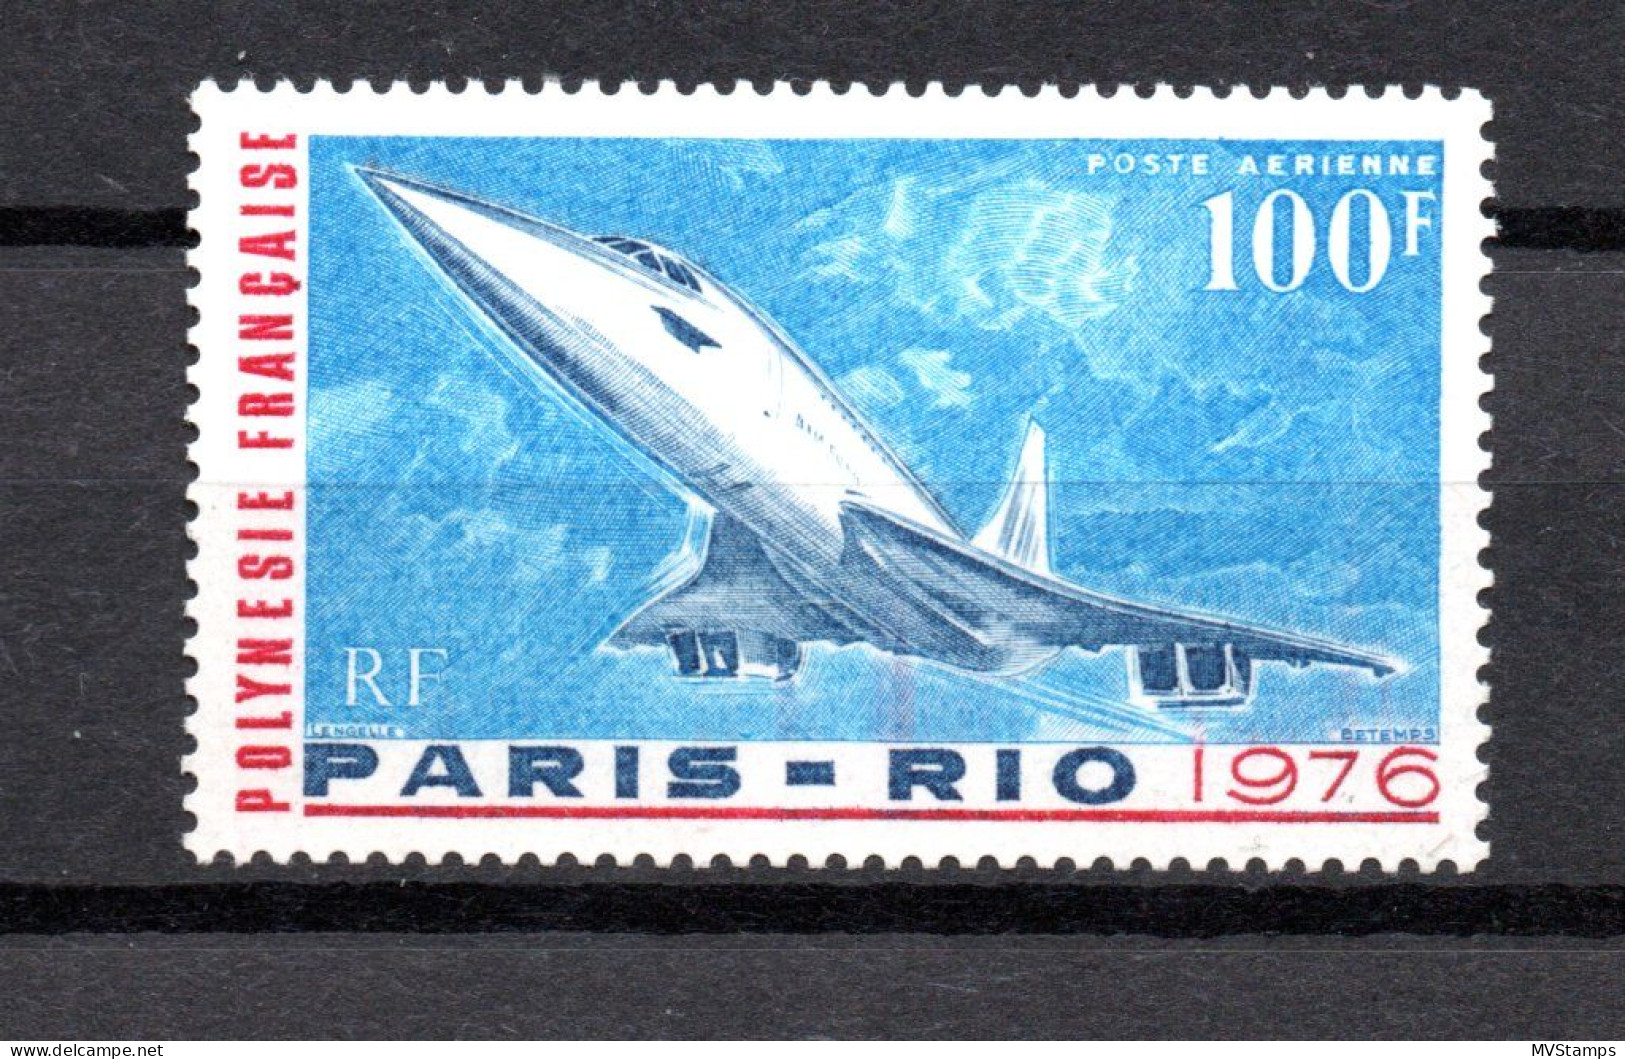 Polynesia (France ) 1976 Concorde/Aviation/airmail Stamp (Michel 208) MNH - Nuovi